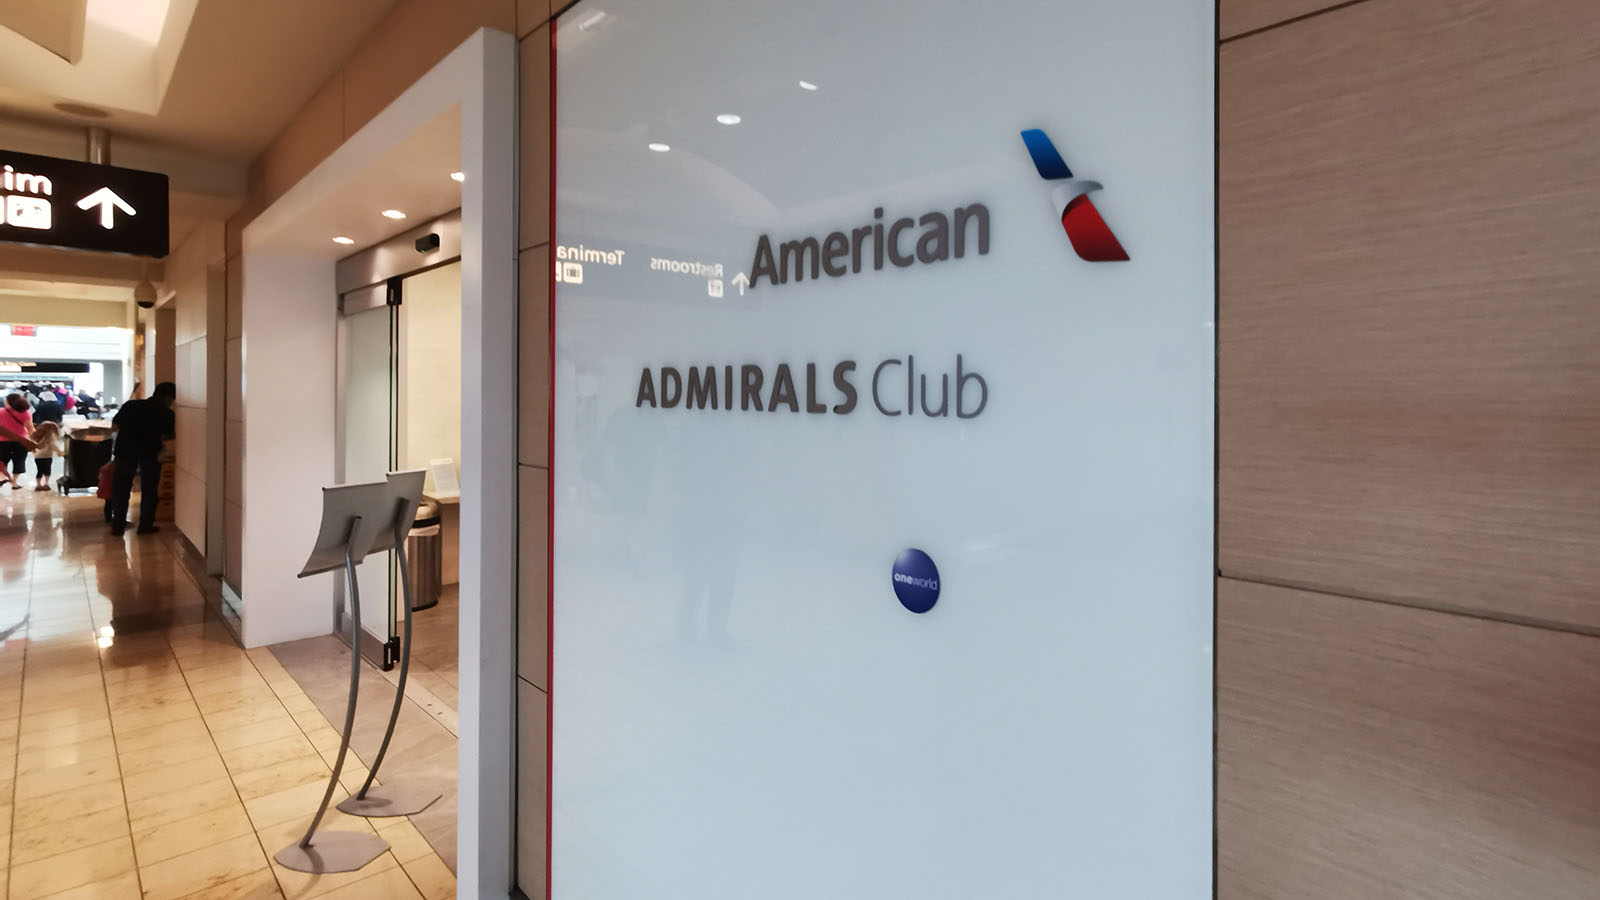 American Airlines Admirals Club, Orlando